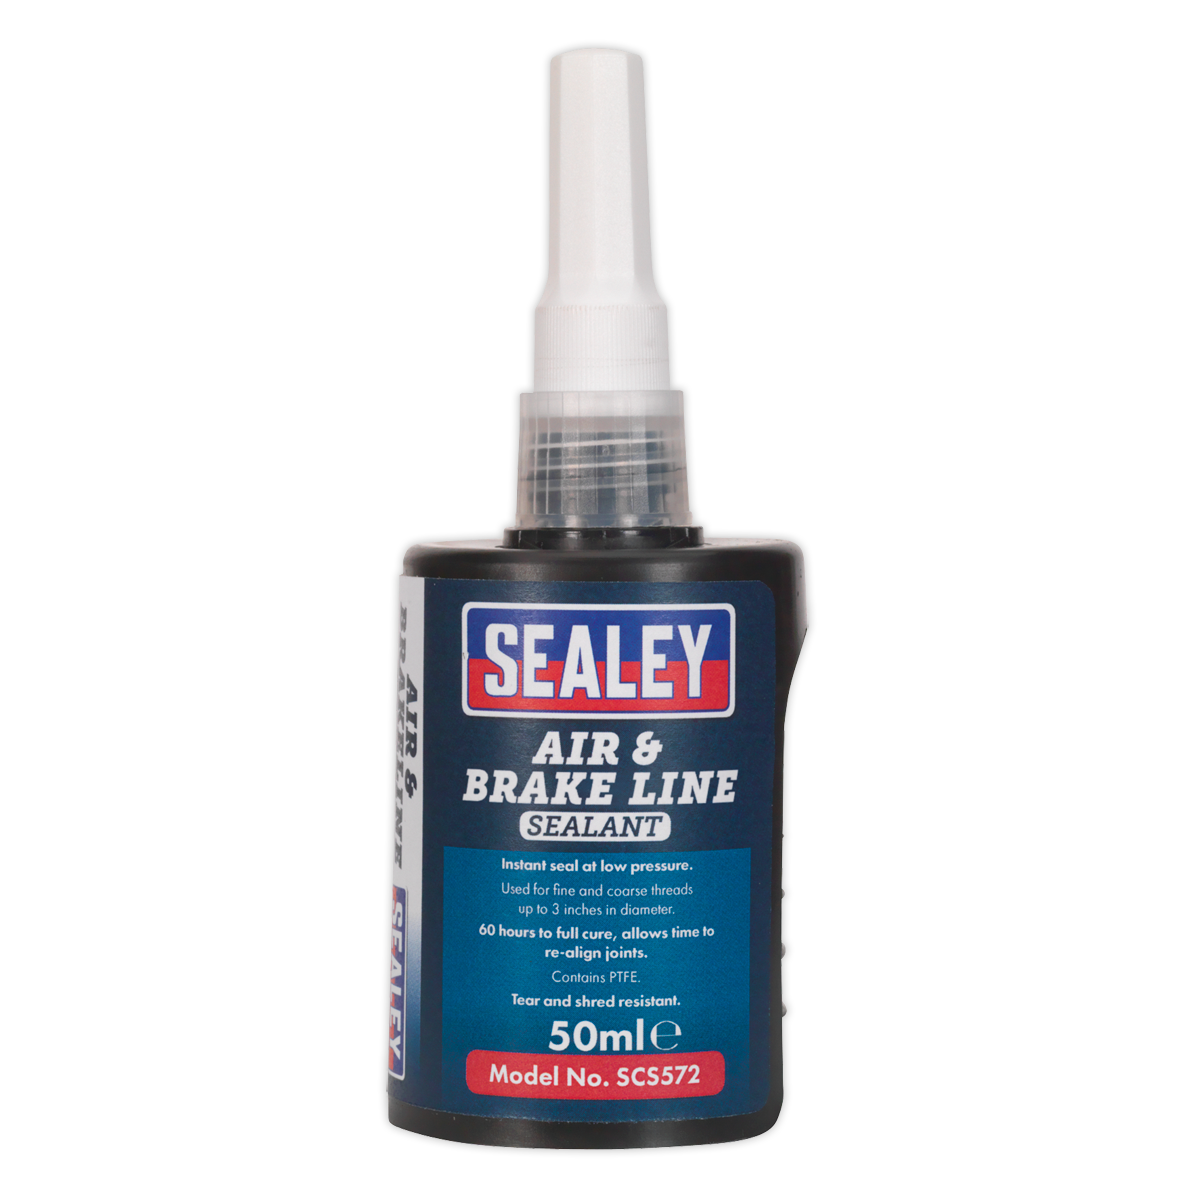 Sealey Air & Brake Line Sealant 50ml